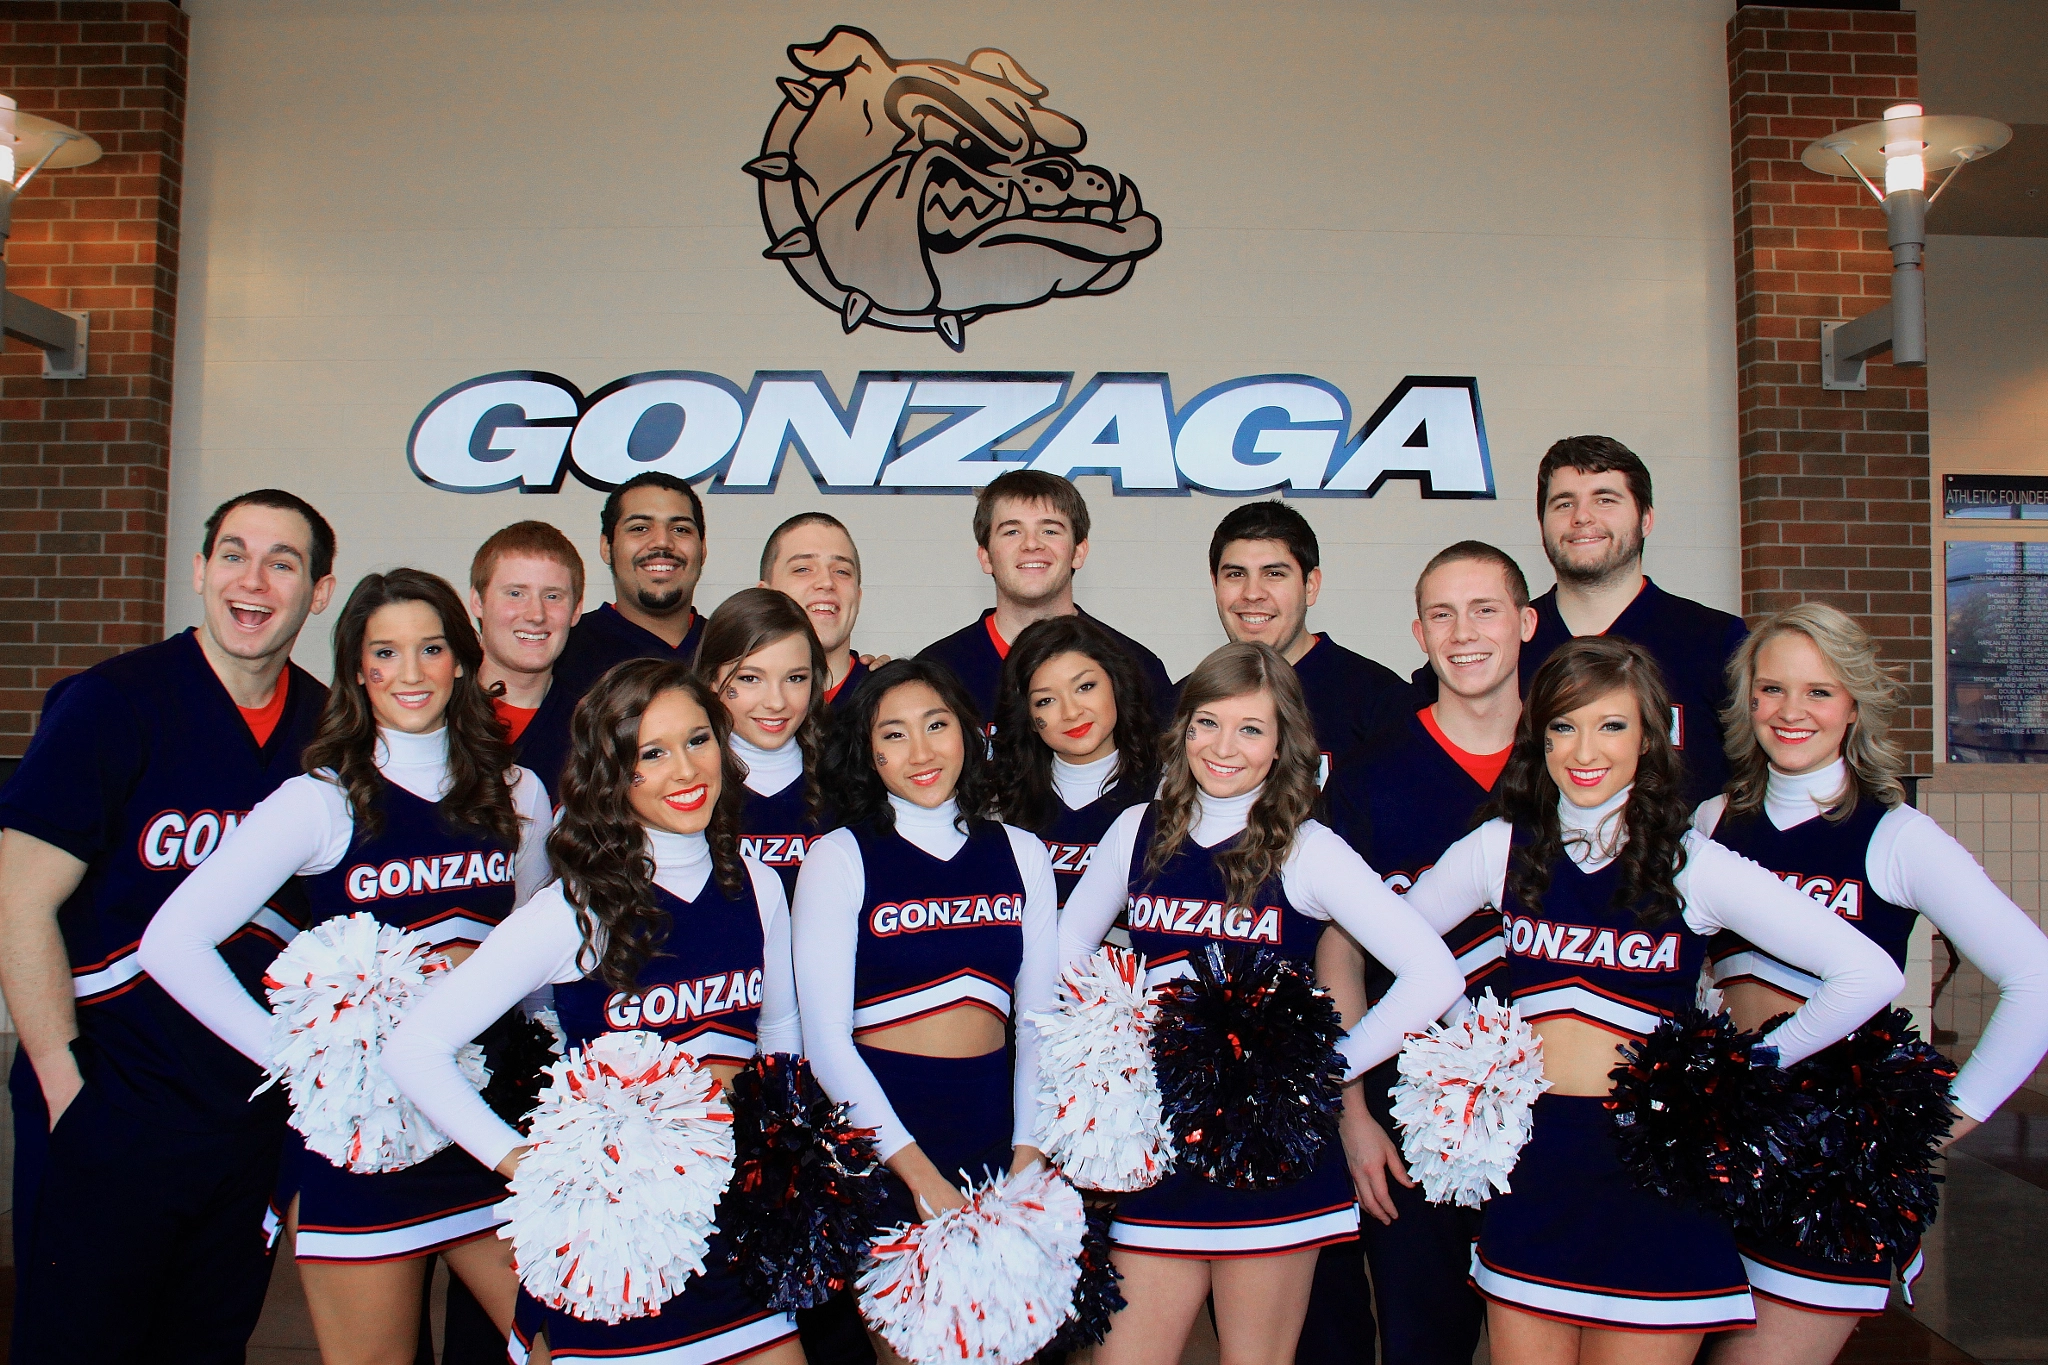 Gonzaga University Cheerleaders by NHaPhotography Photo 25943461 / 500px